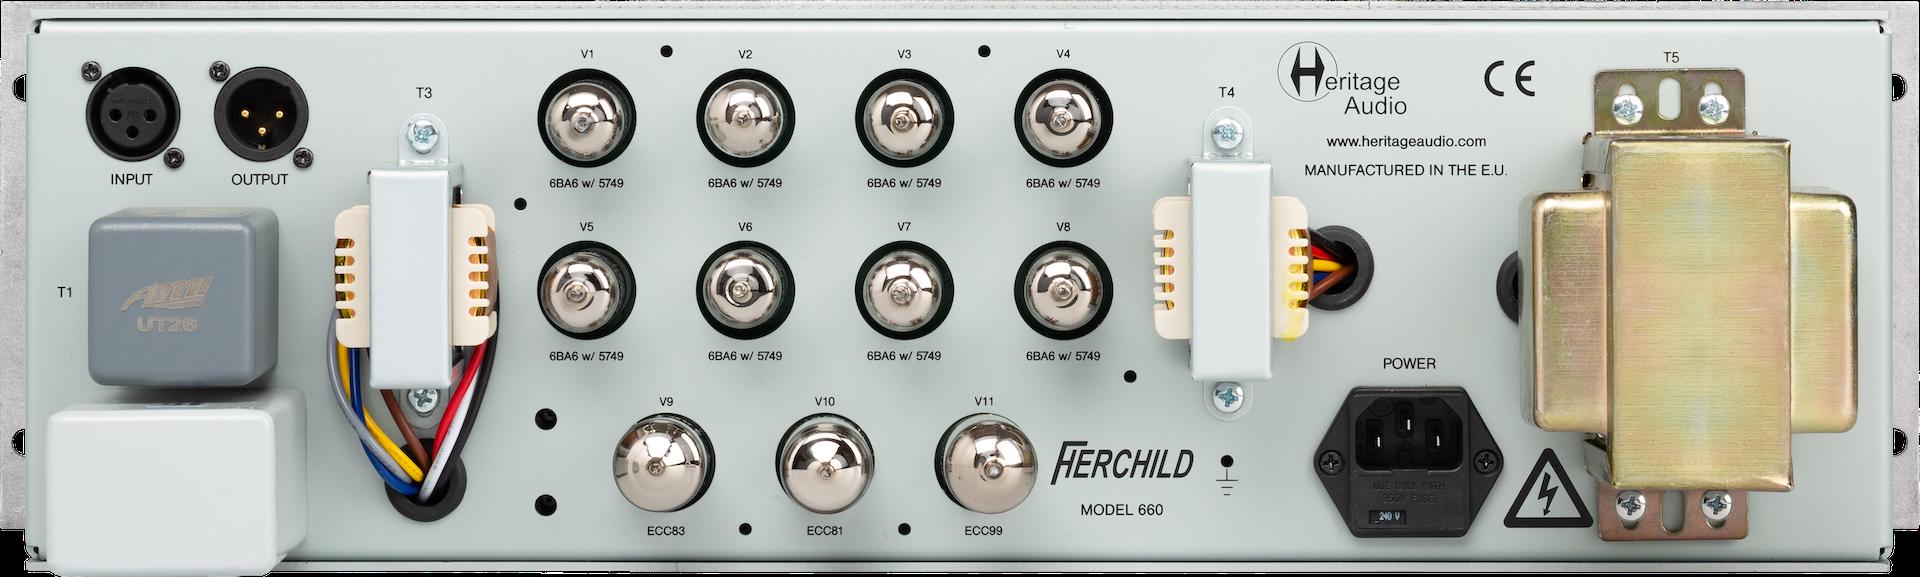 Herchild-Model-660-vista-4-v.2.png.jpg